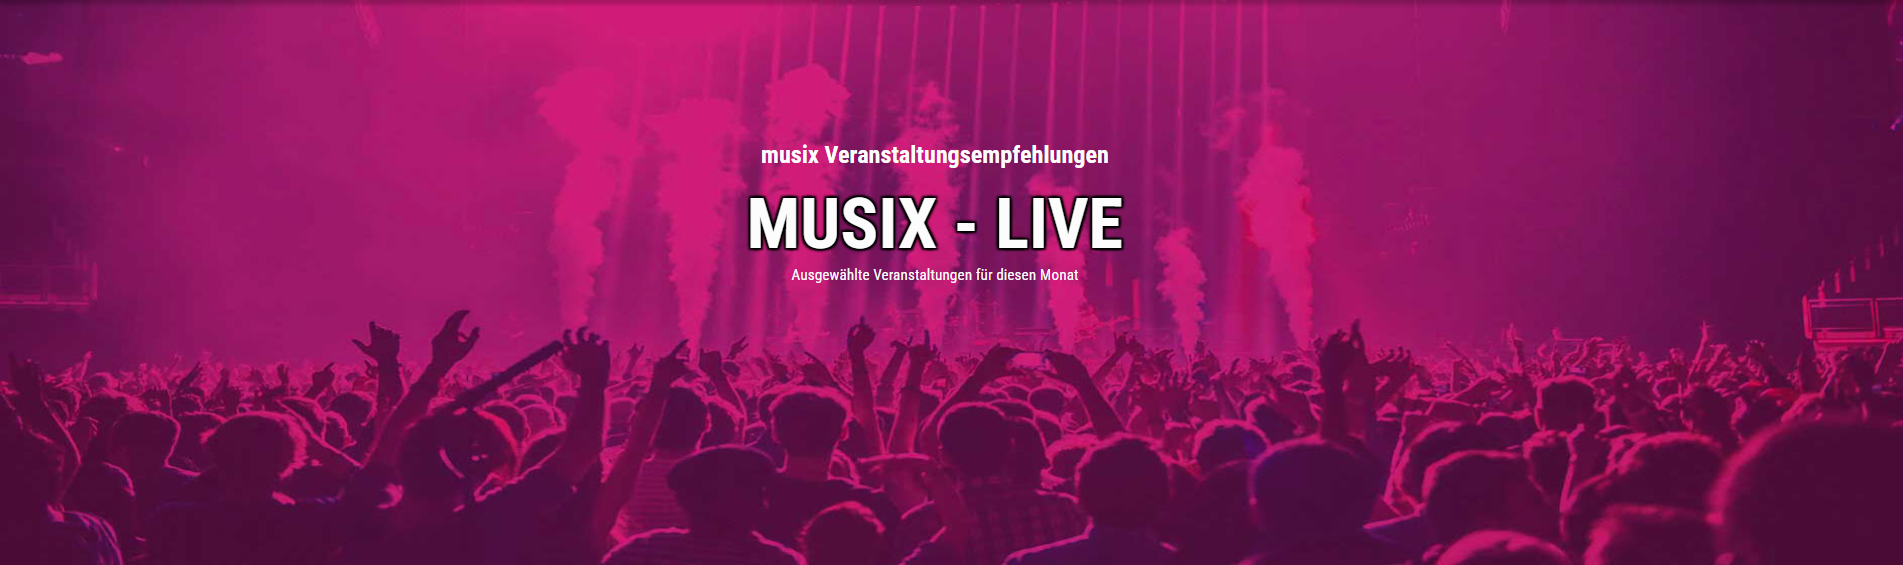 musix live